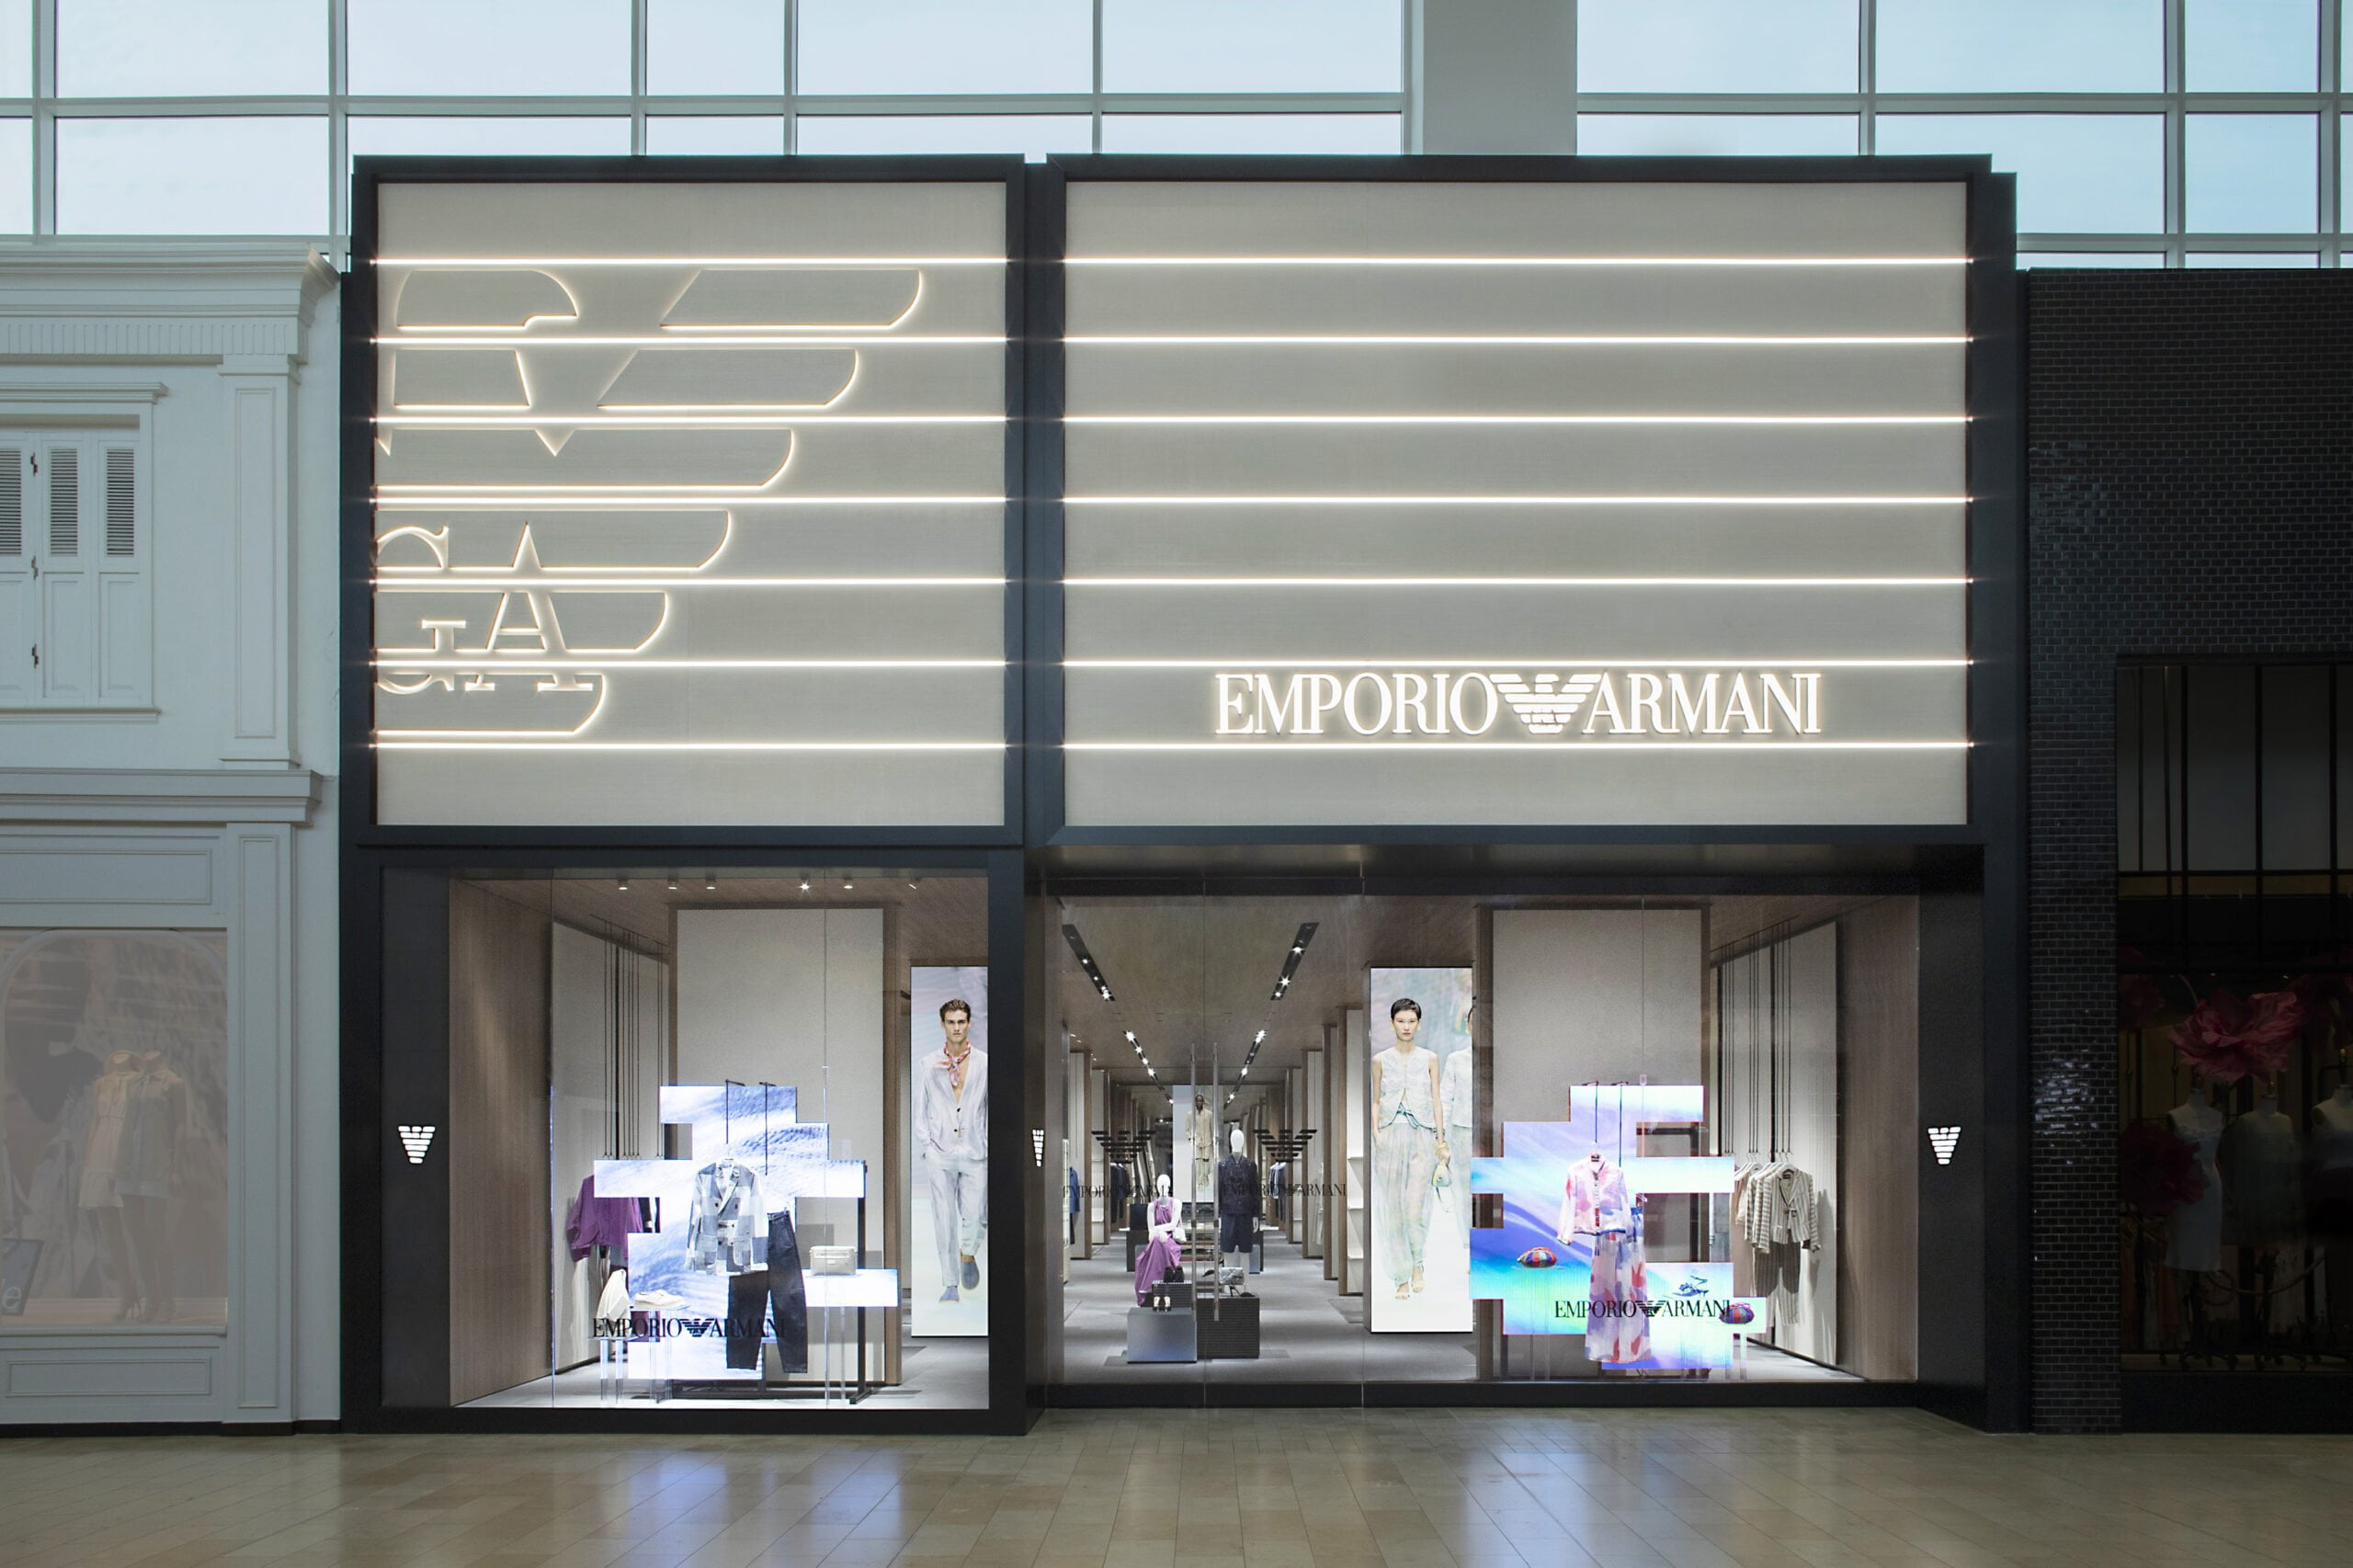 Armani Opens 1st Standalone Emporio Armani Store at Toronto's Shopping [Photos]